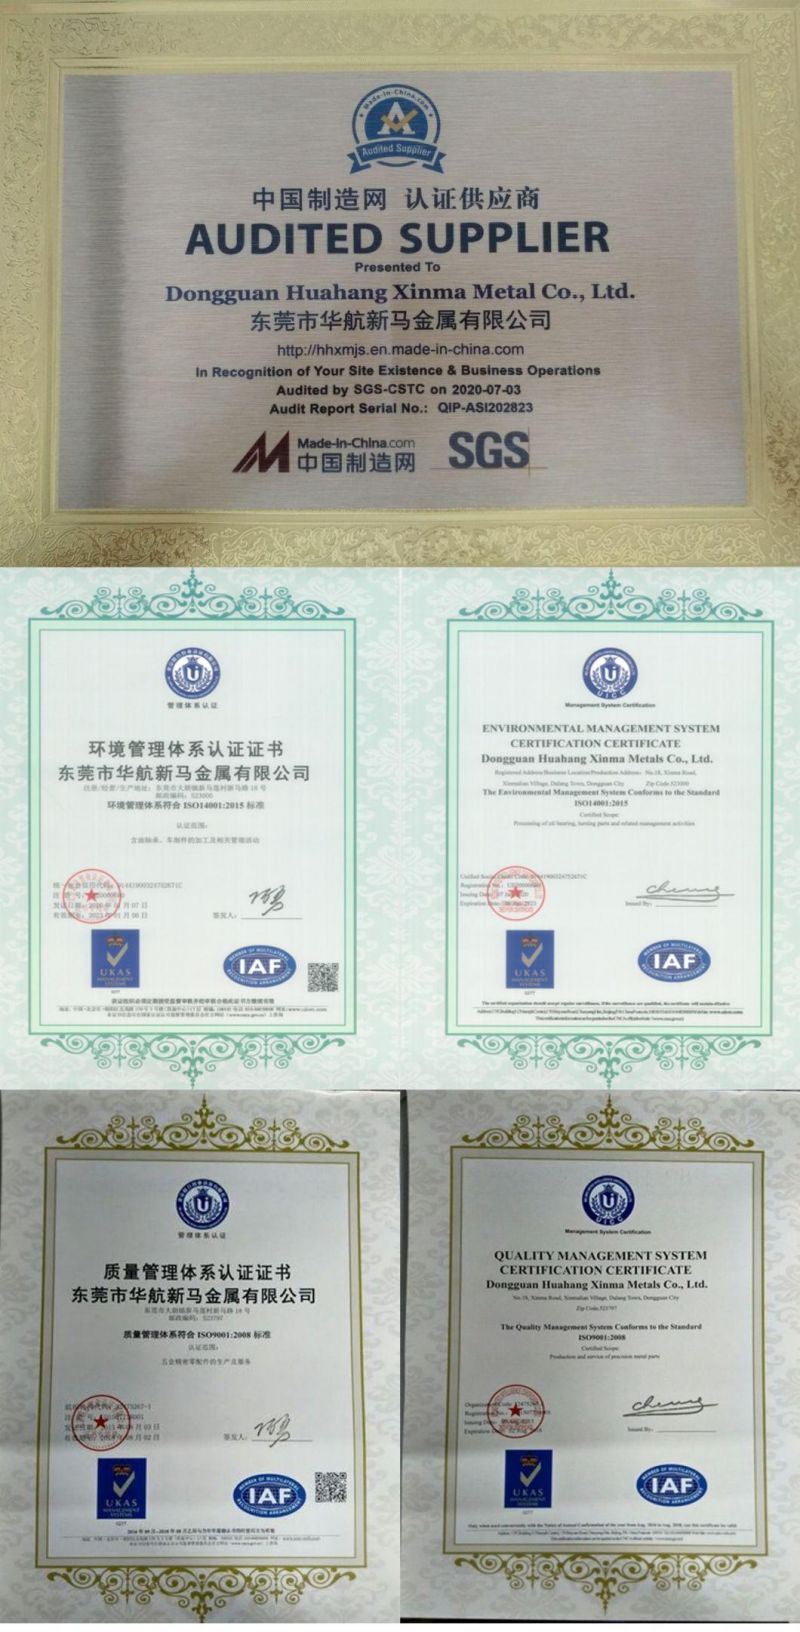 CNC Machine Parts Suppliers in China CNC Machine Non-Standard for Metal/Aluminum